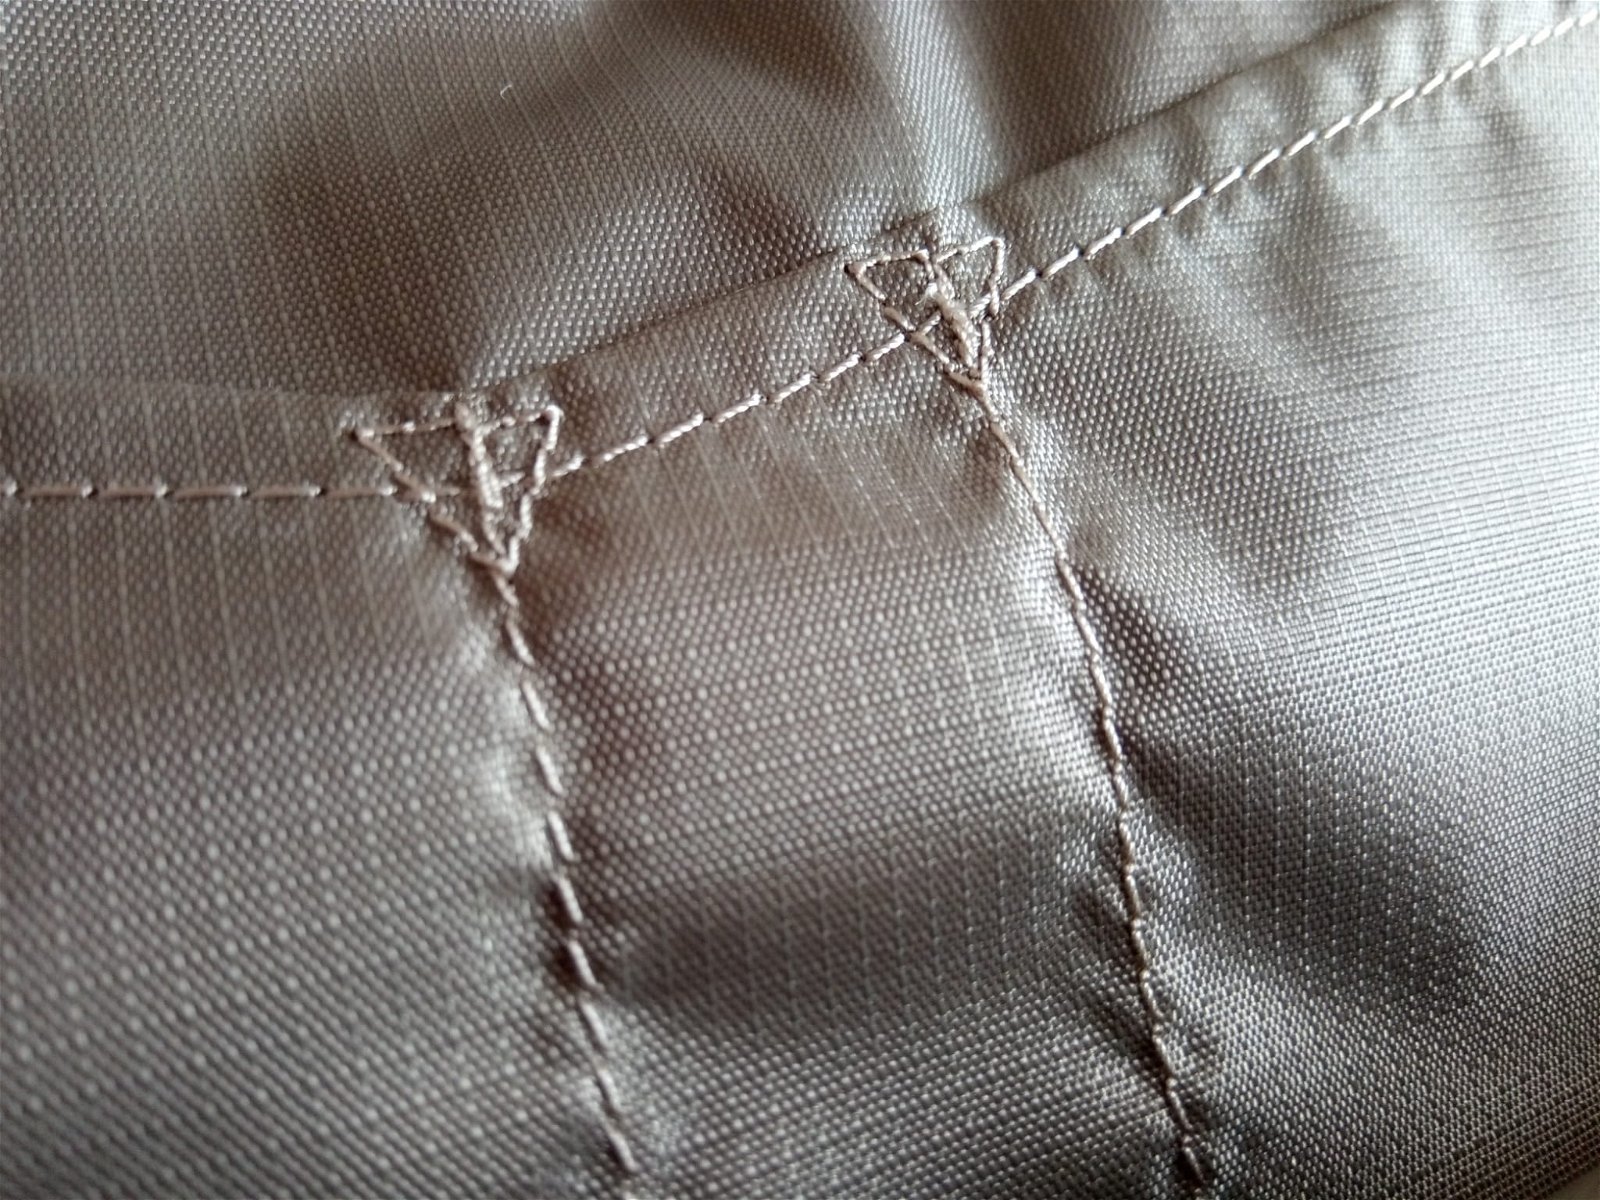 Close-up of interior stitching